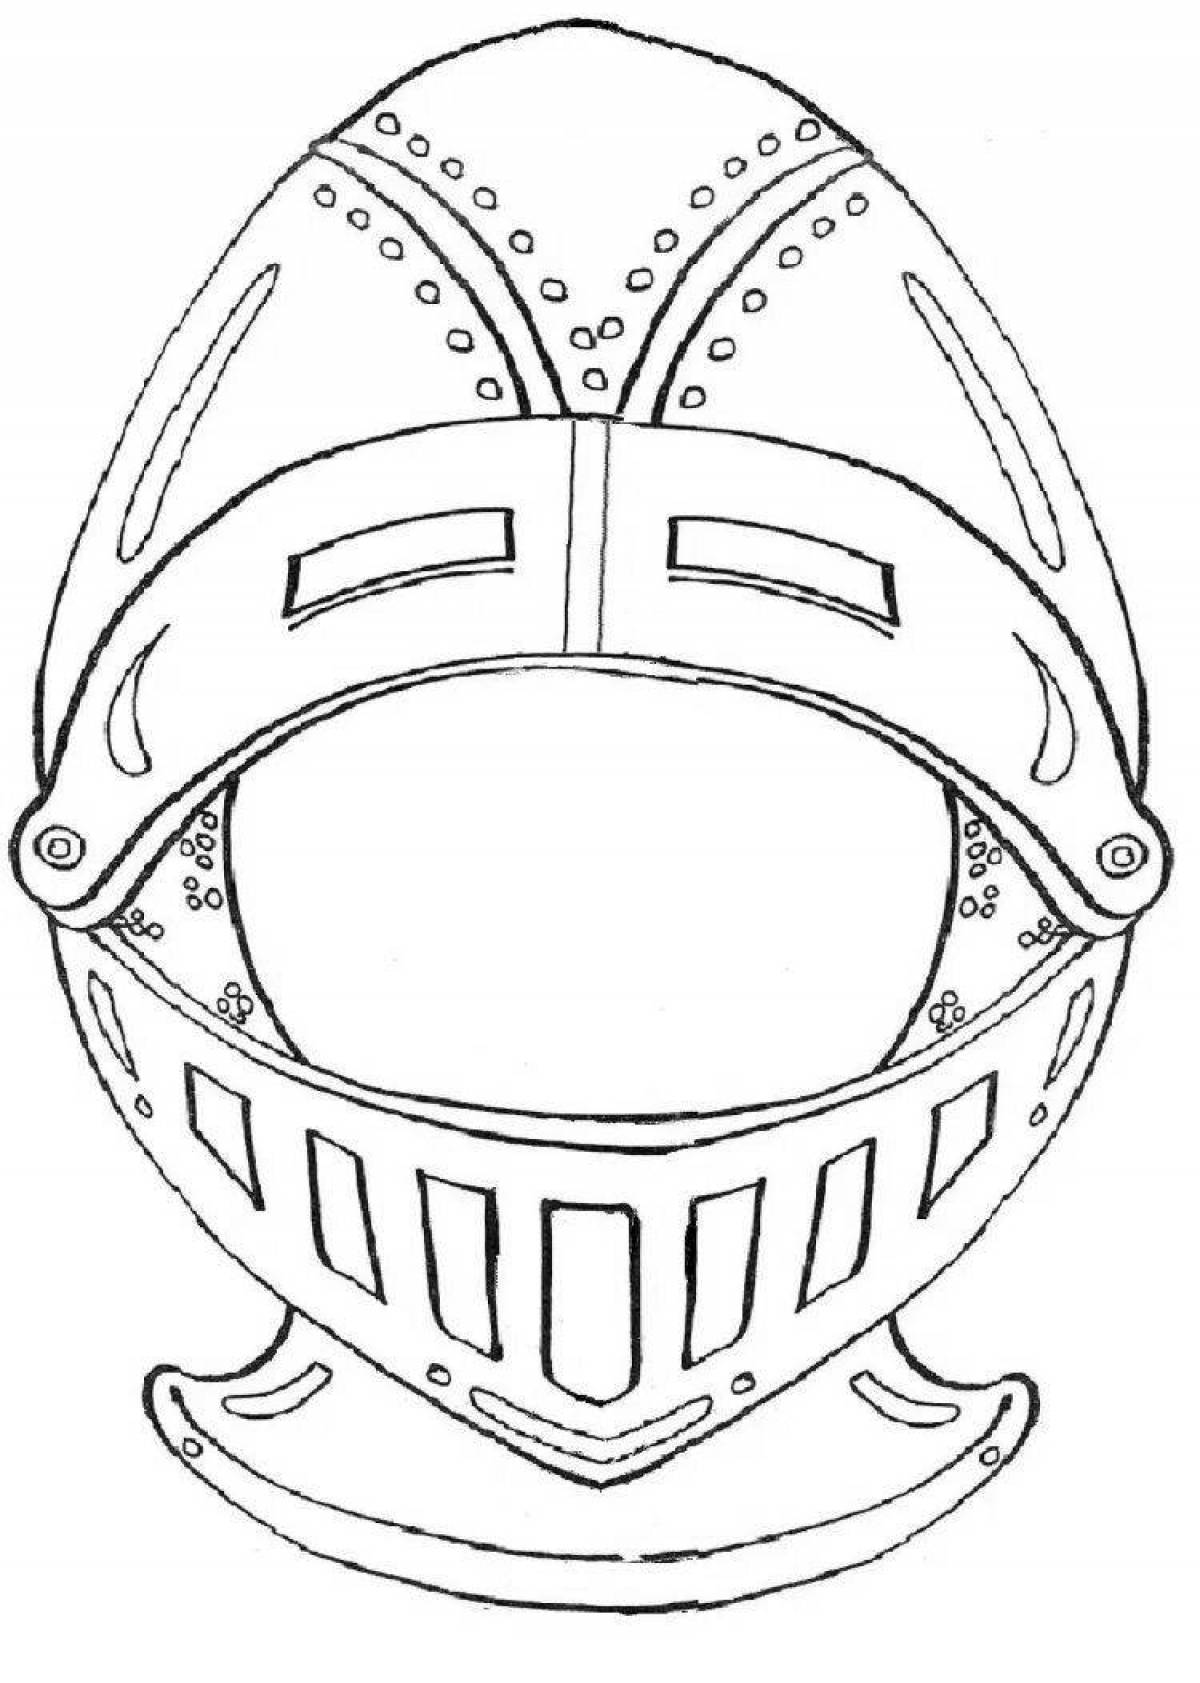 Fine helmet coloring page